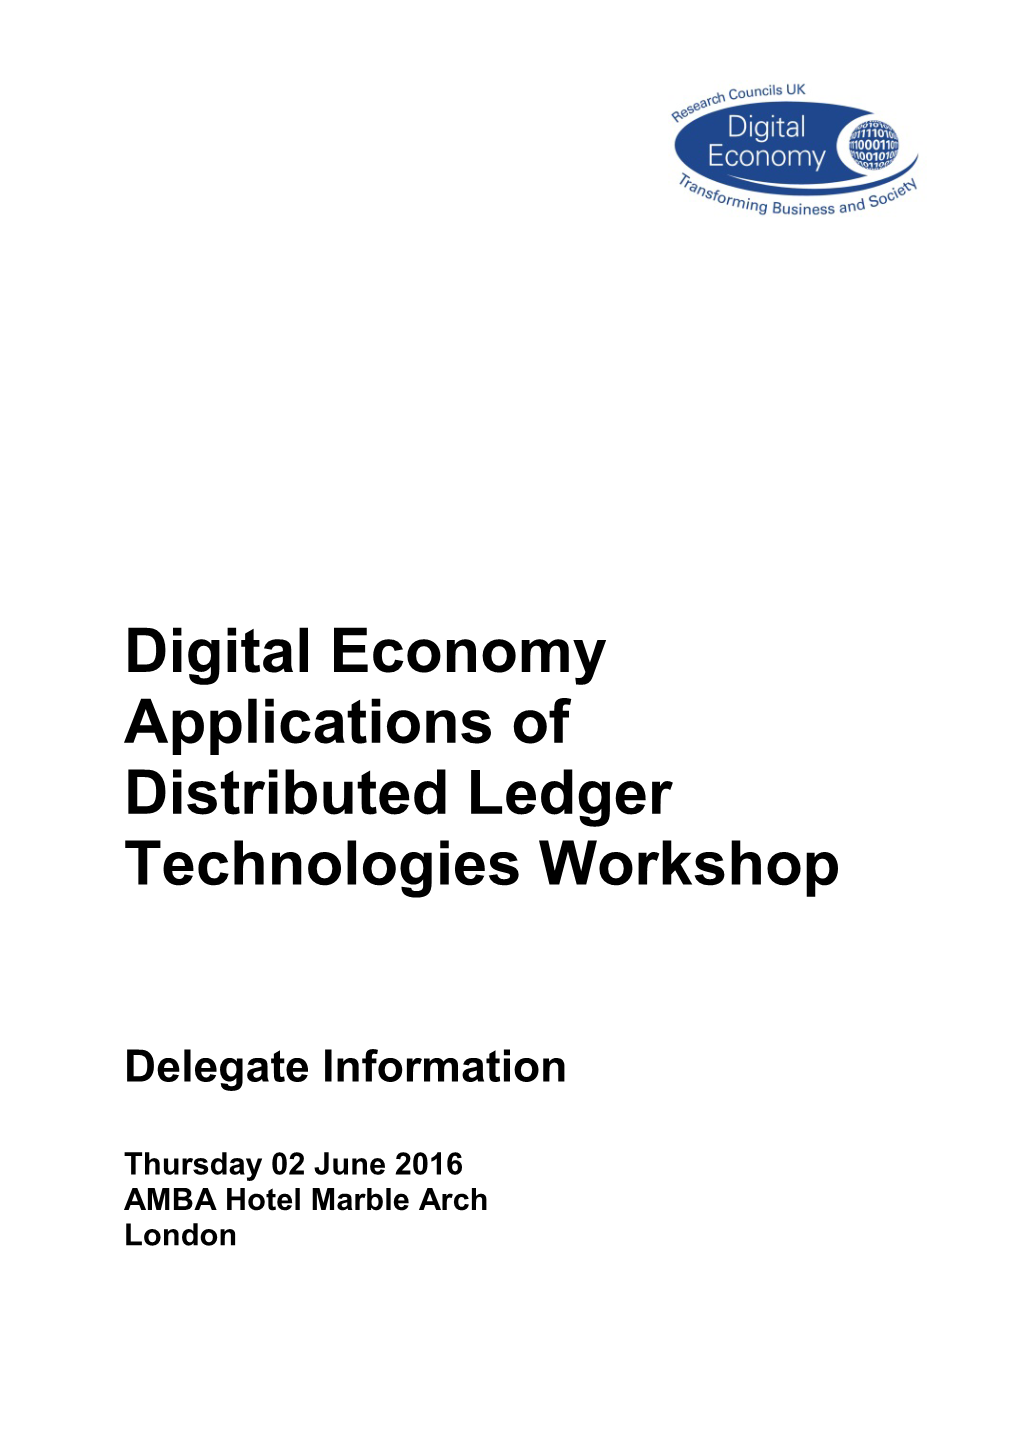 Digital Economy Applications of Distributed Ledger Technologies Workshop